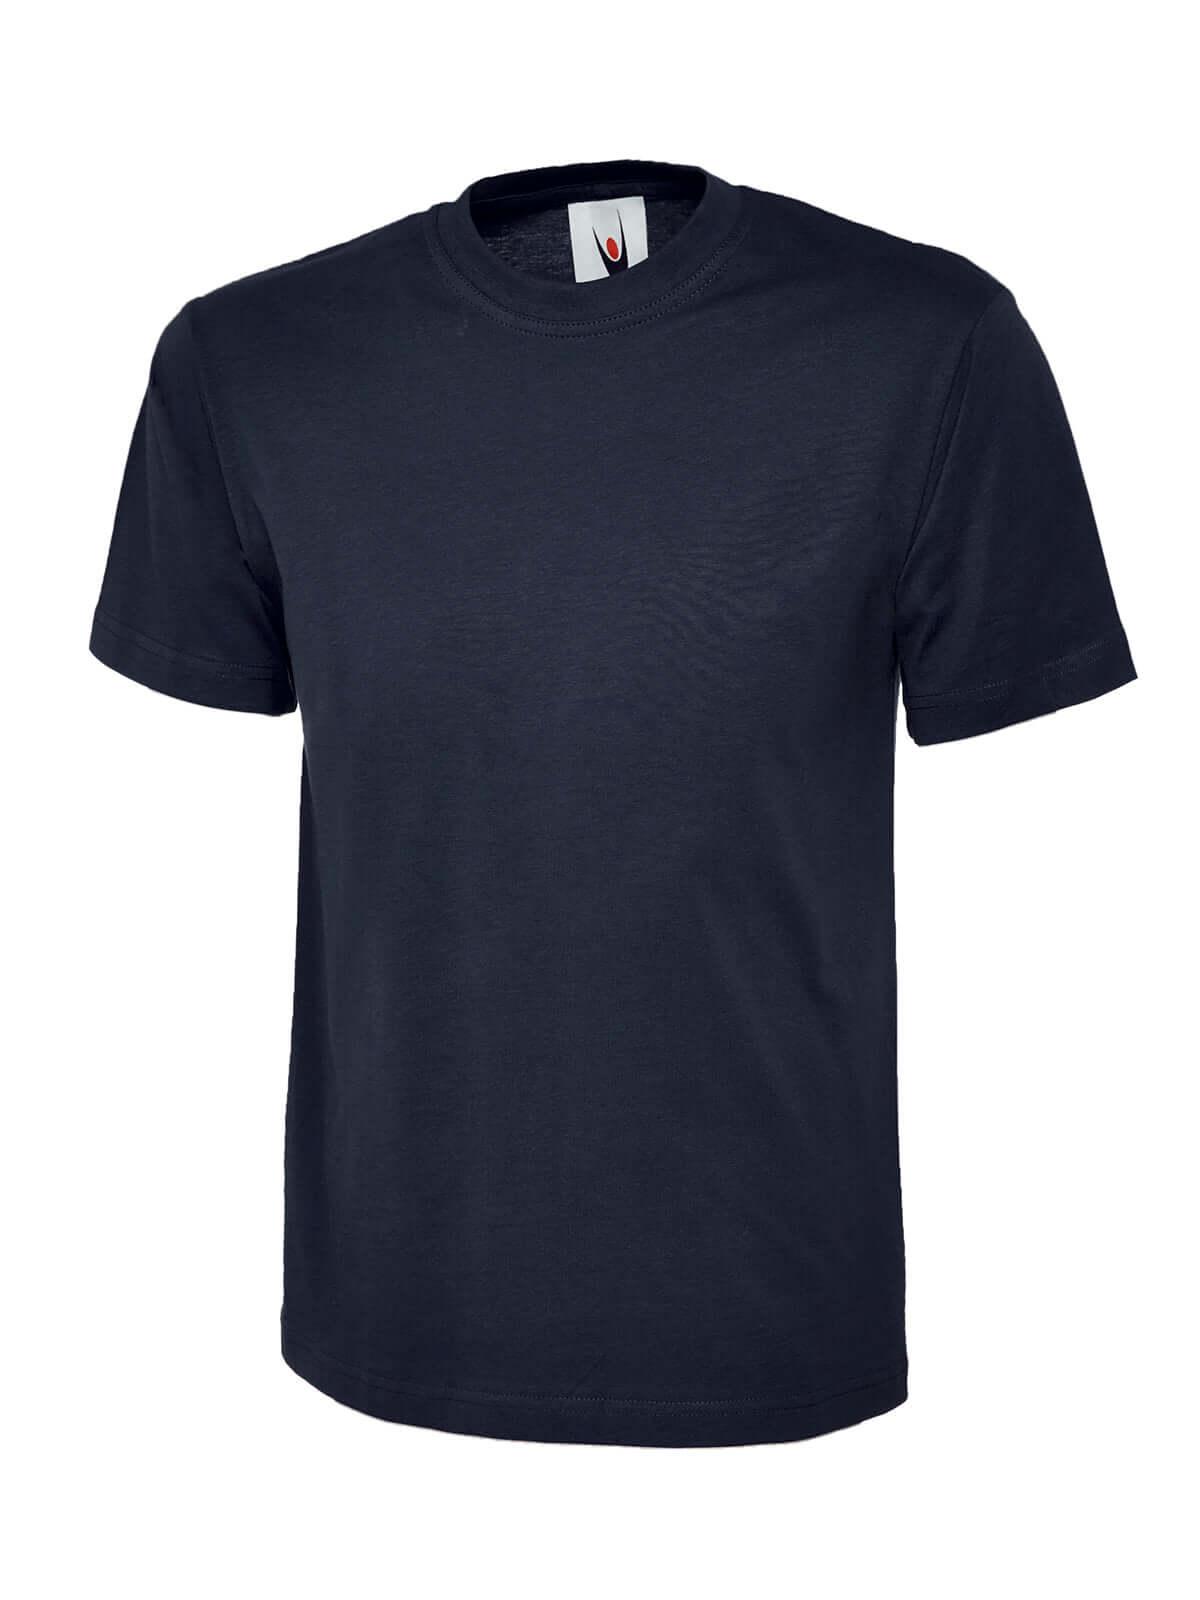 Pegasus Uniform Classic T-shirt - Navy Blue